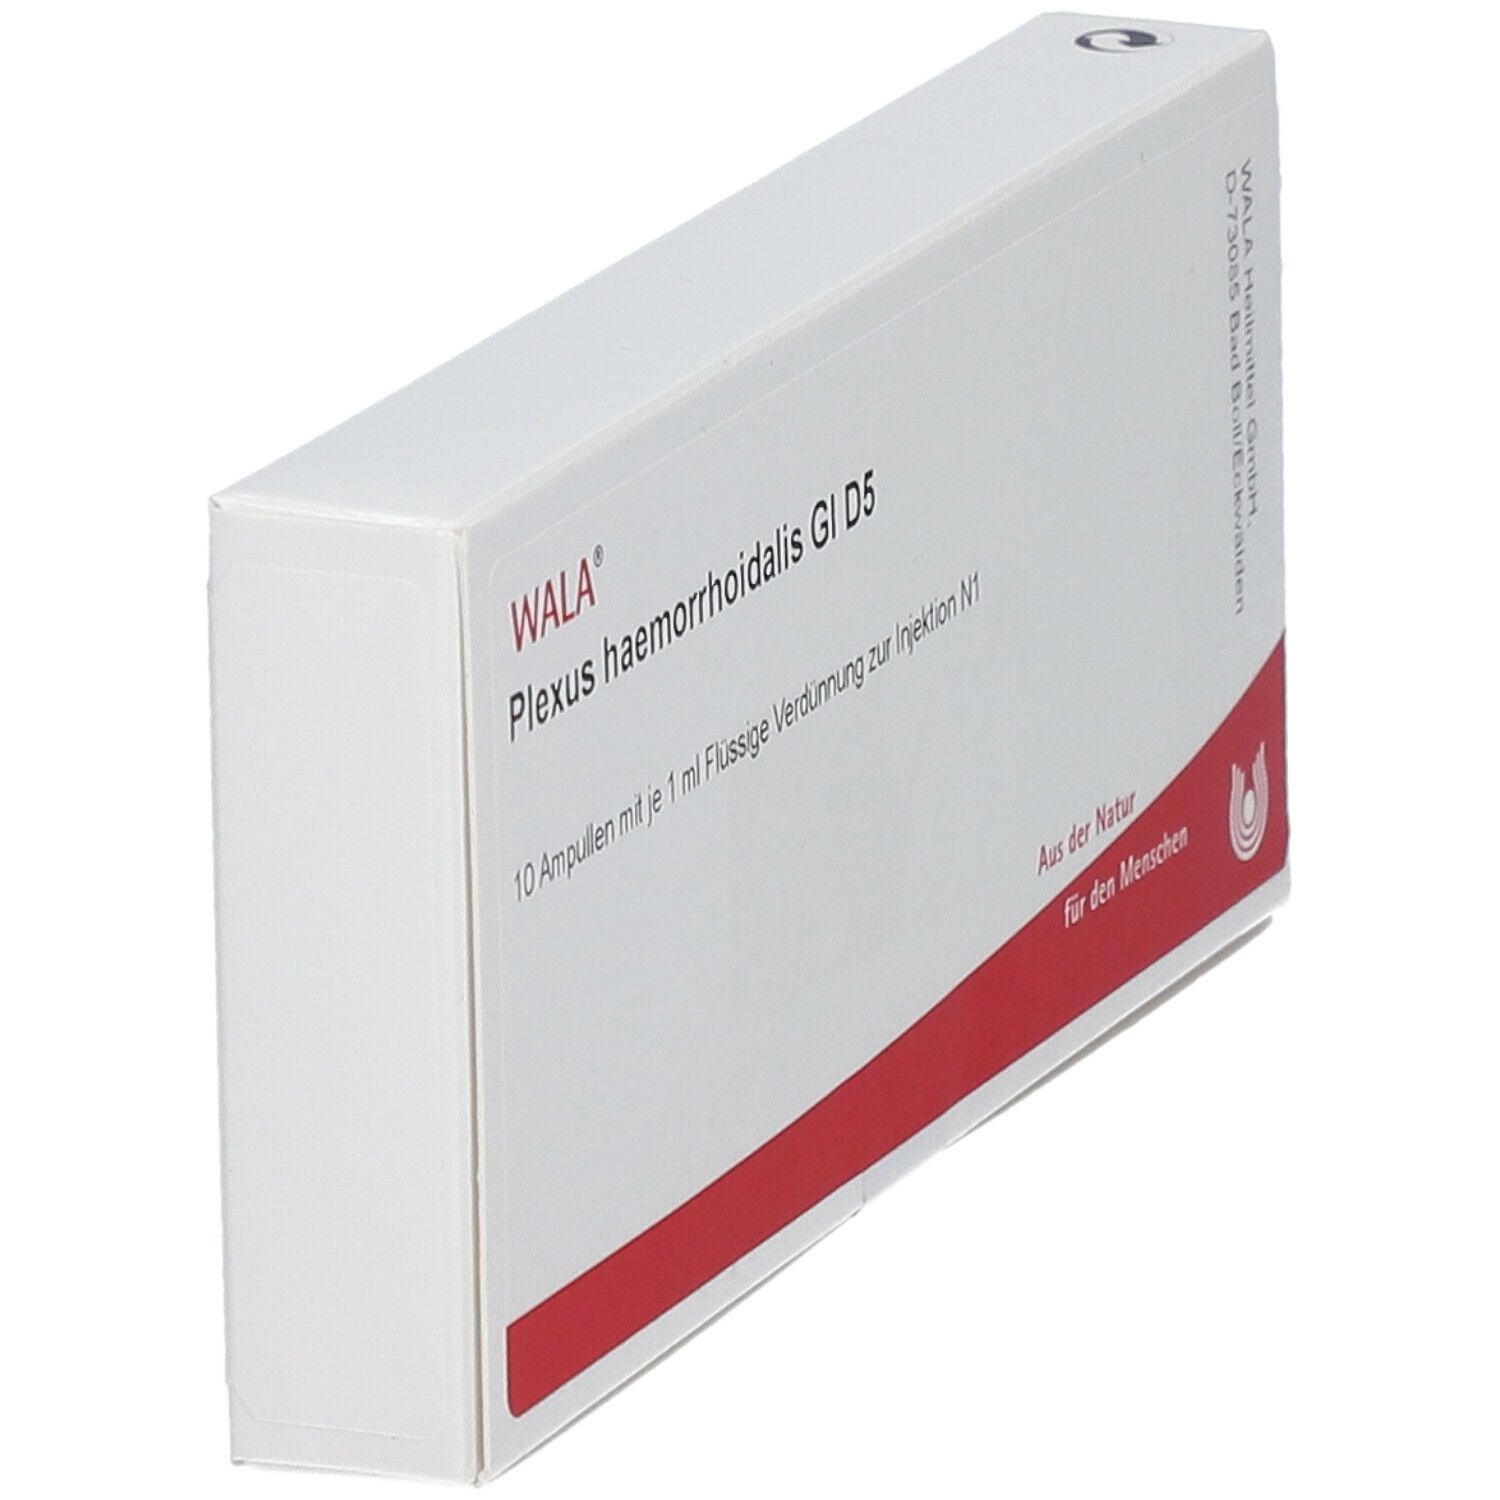 WALA® Plexus haemorrhoidalis Gl D 5